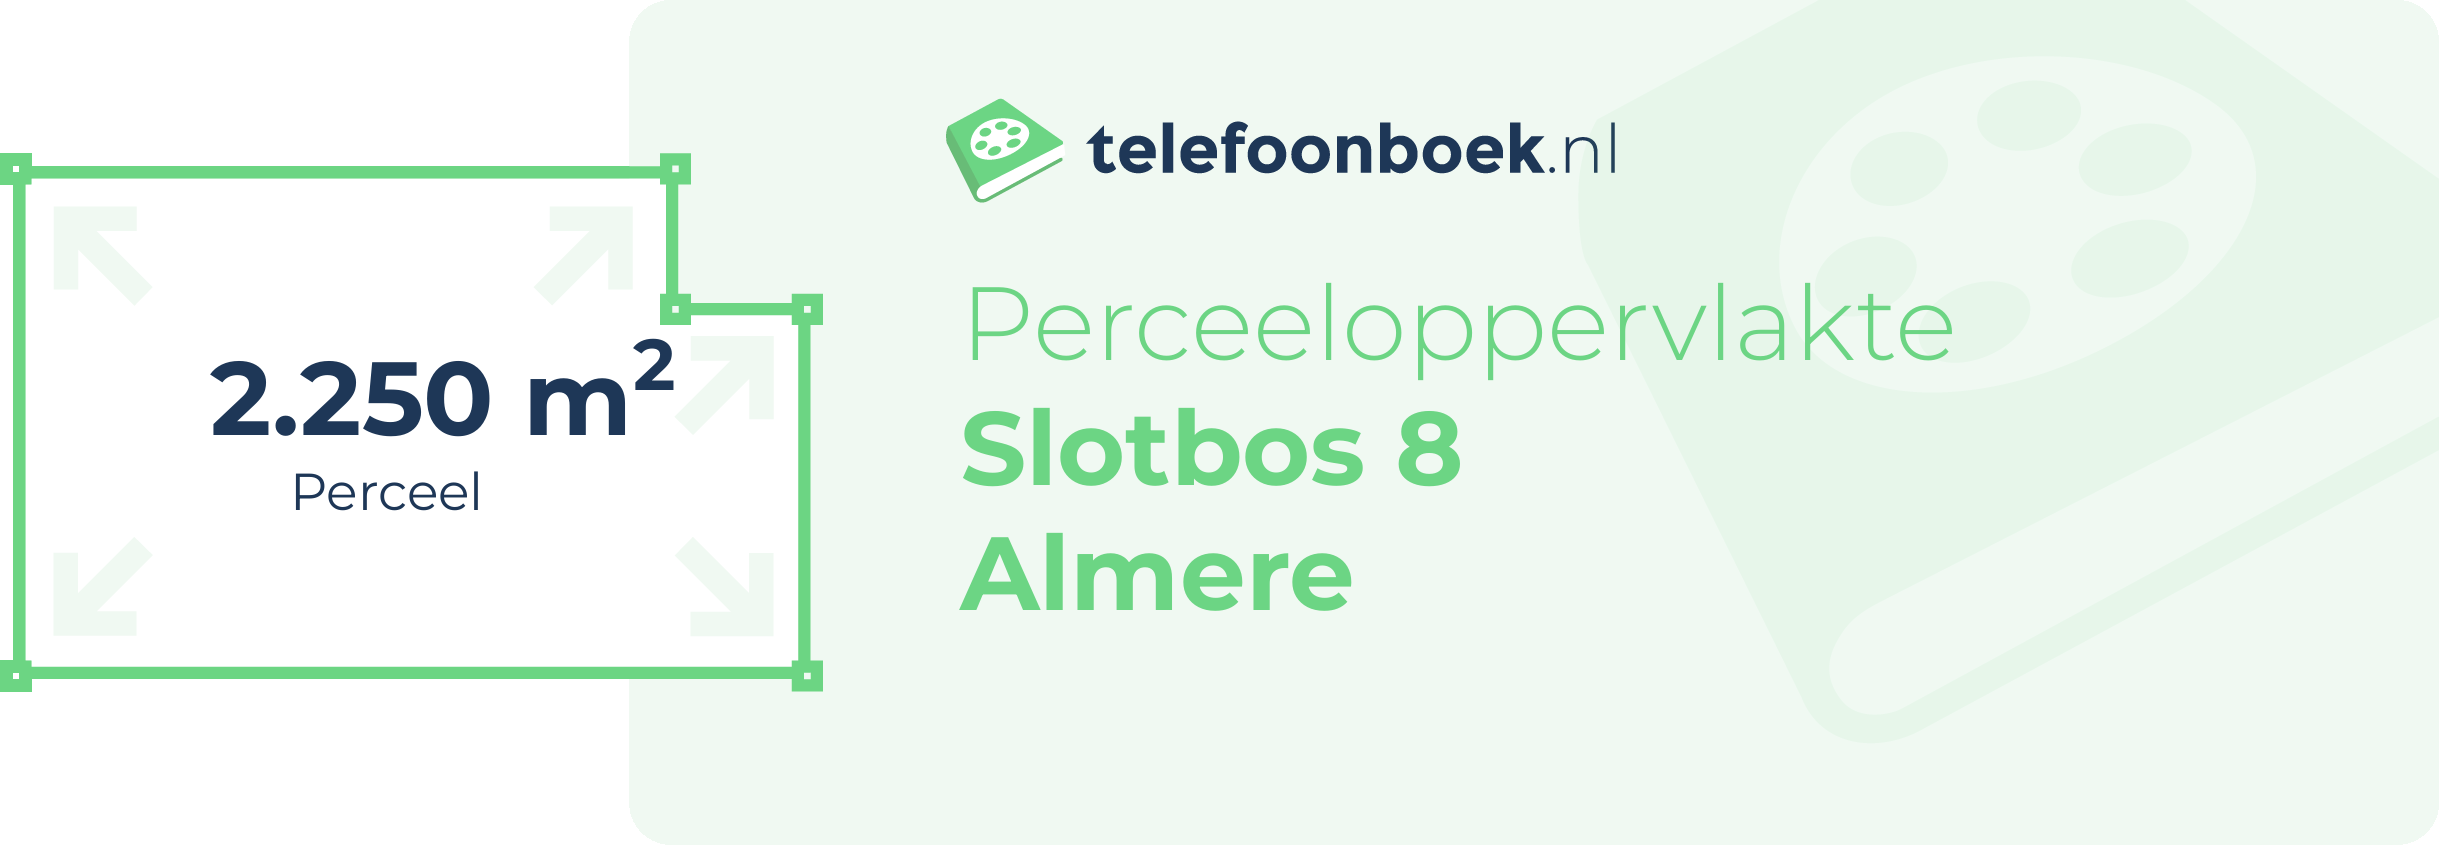 Perceeloppervlakte Slotbos 8 Almere